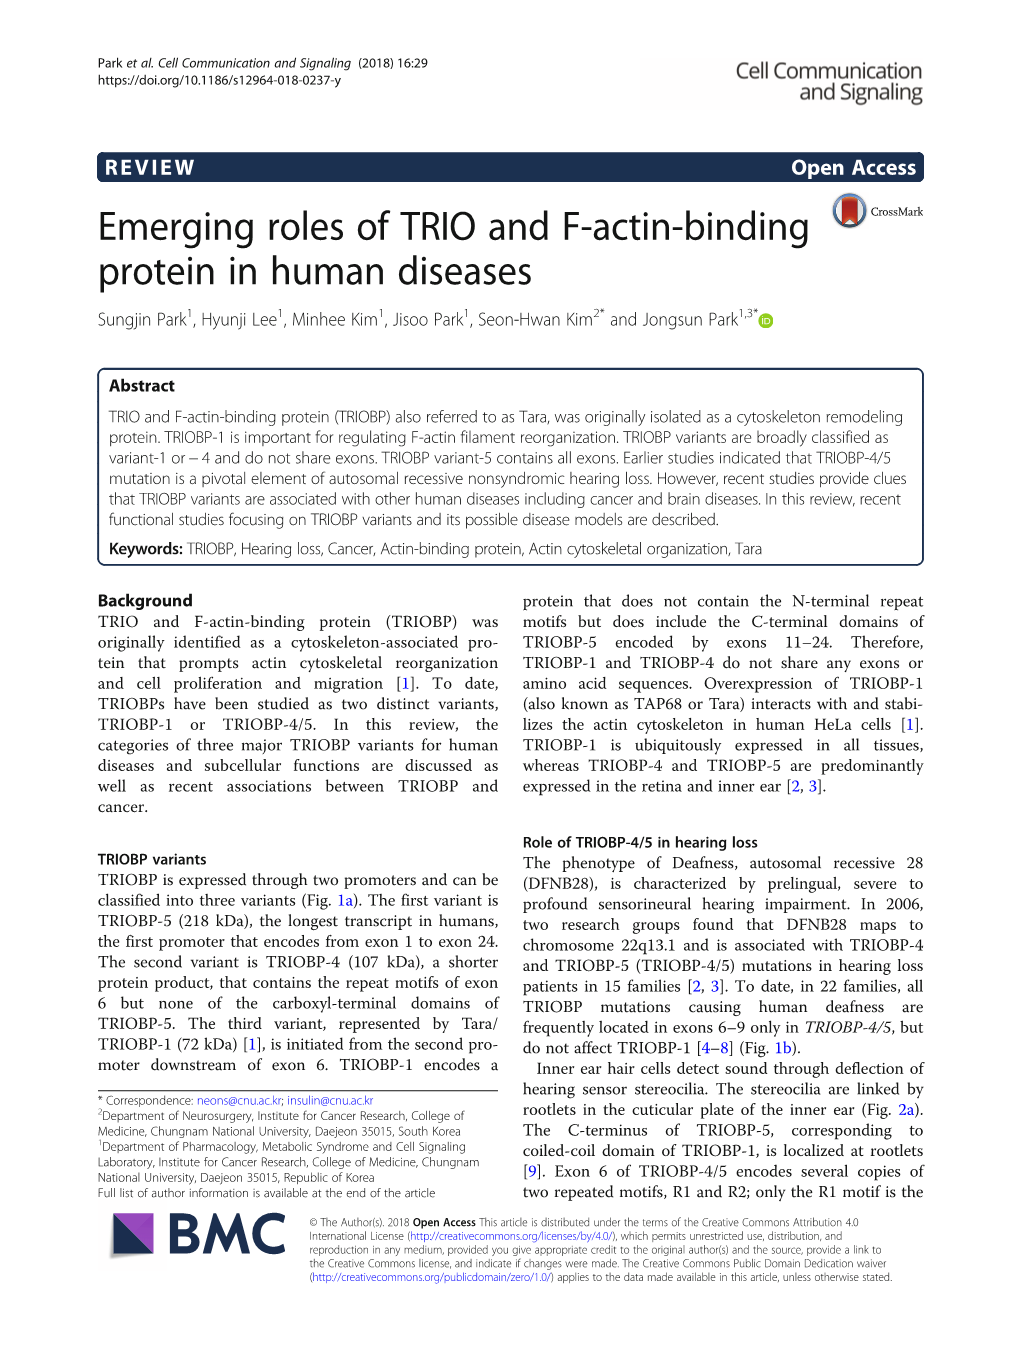 Emerging Roles of TRIO and F-Actin-Binding Protein in Human Diseases Sungjin Park1, Hyunji Lee1, Minhee Kim1, Jisoo Park1, Seon-Hwan Kim2* and Jongsun Park1,3*